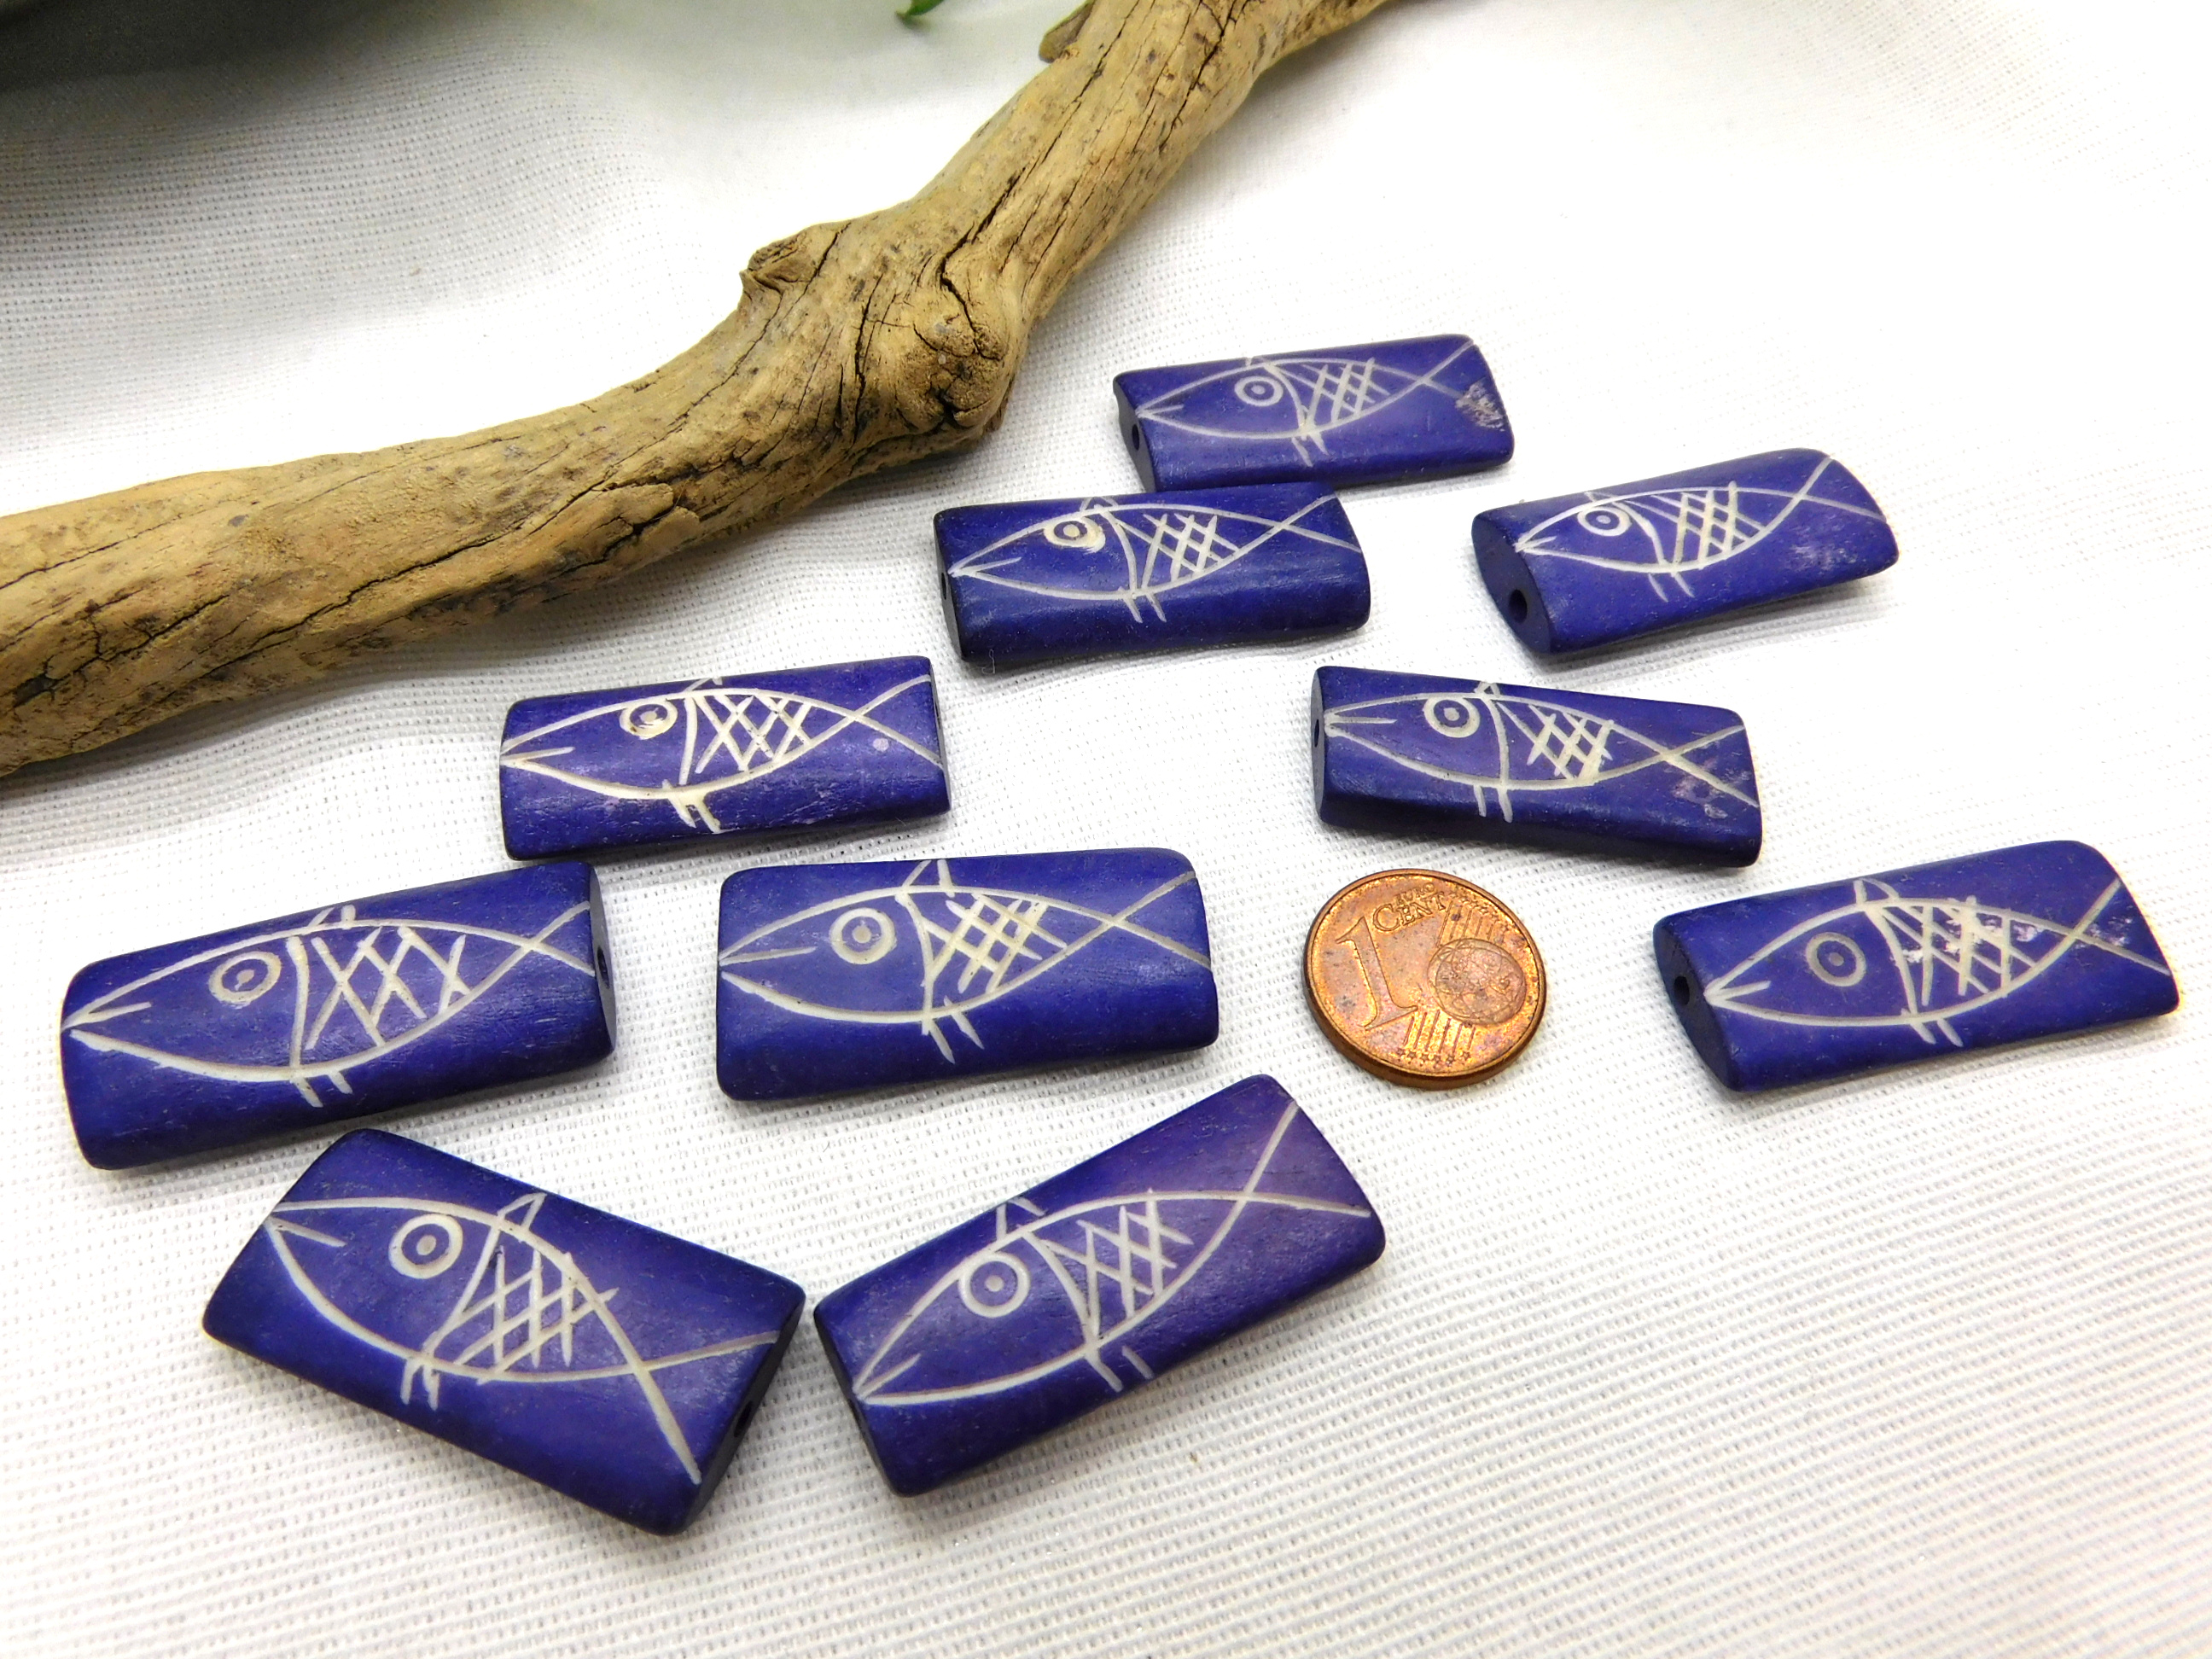 bone beads - purple with fish engraving